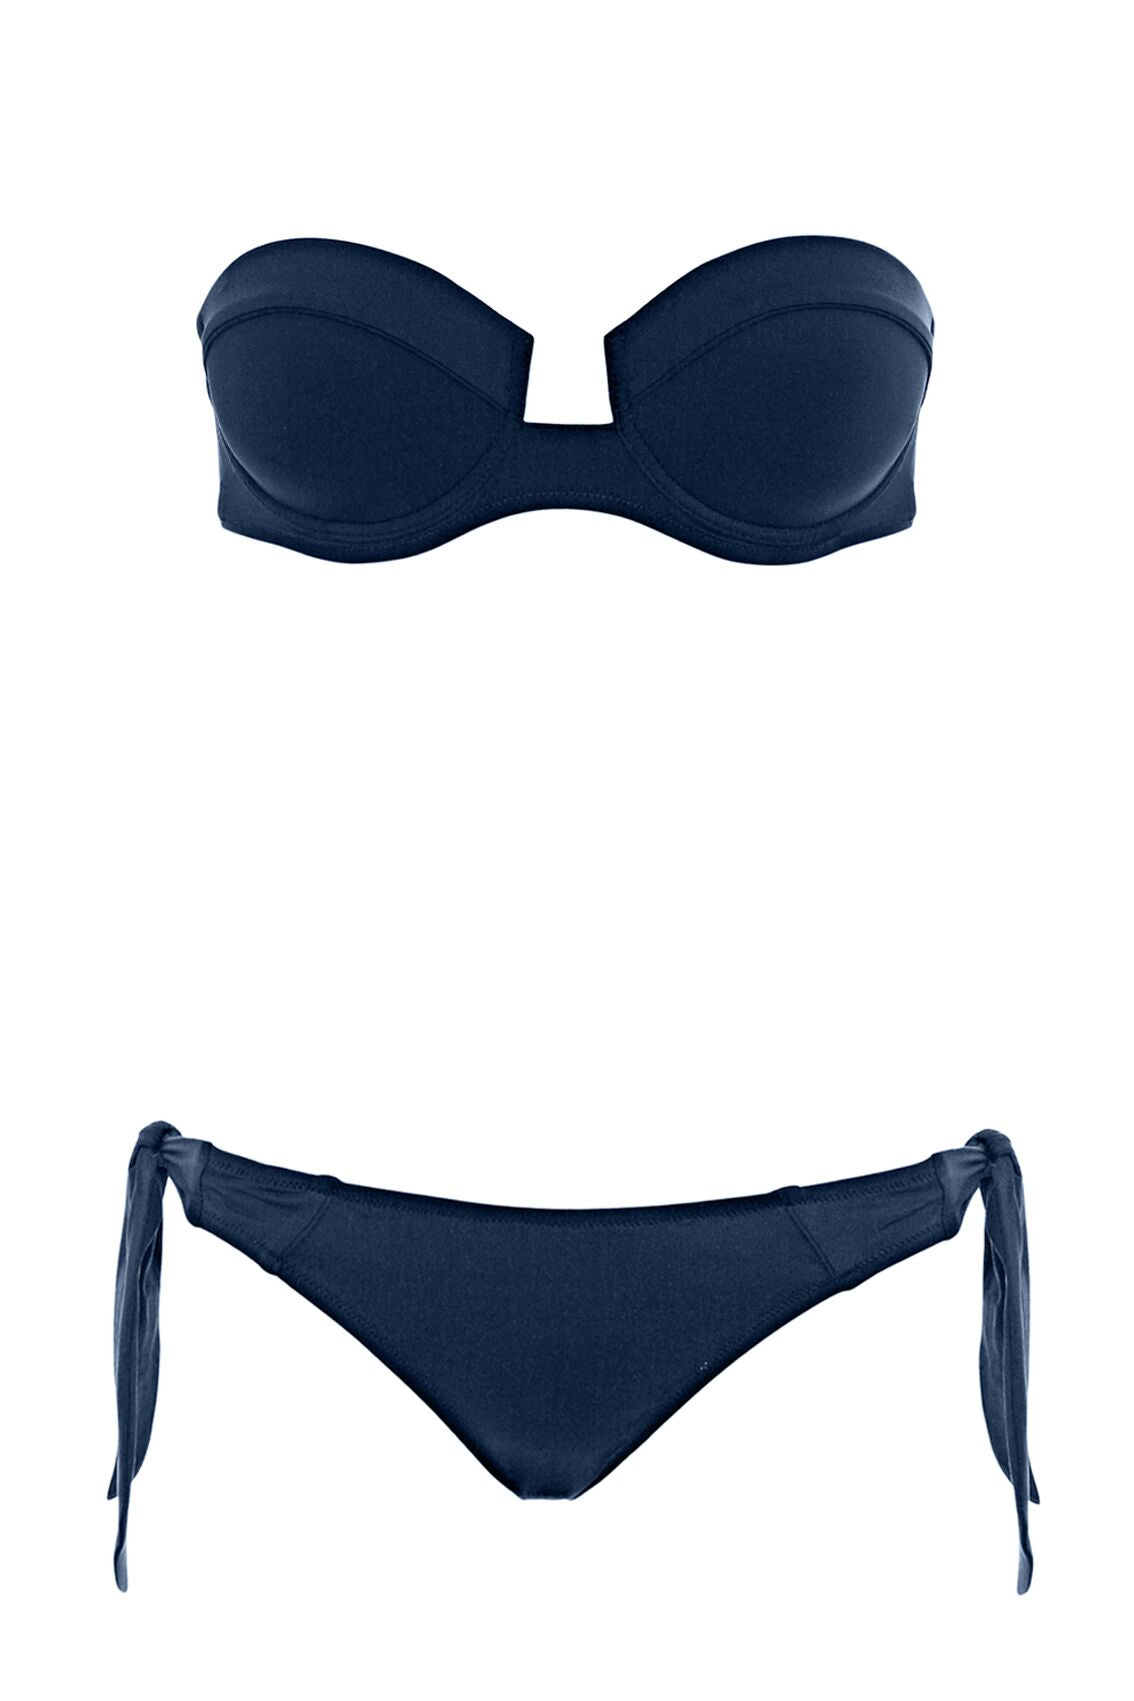 Paolita Swimwear Nina Navy Underwire Cup Designer Luxury Bikini Set 